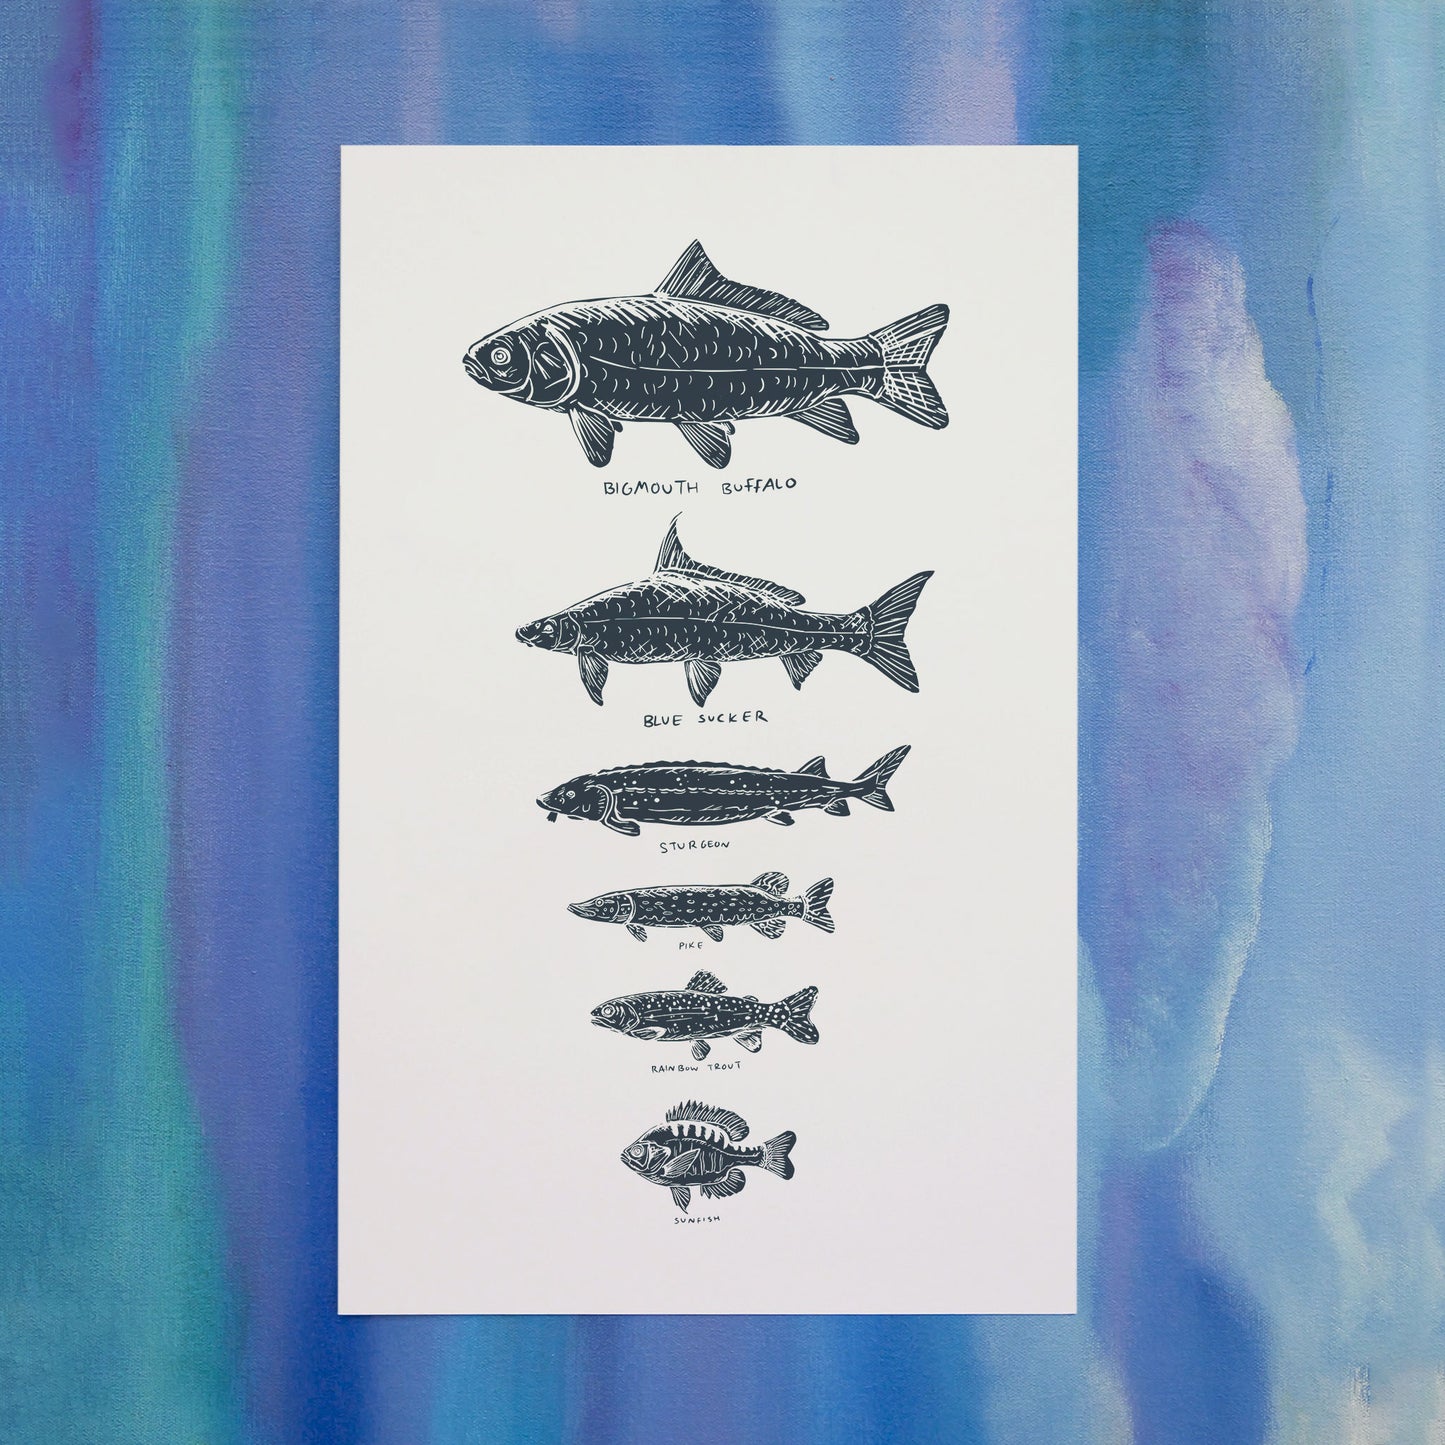 "Fish of Montana" Poster